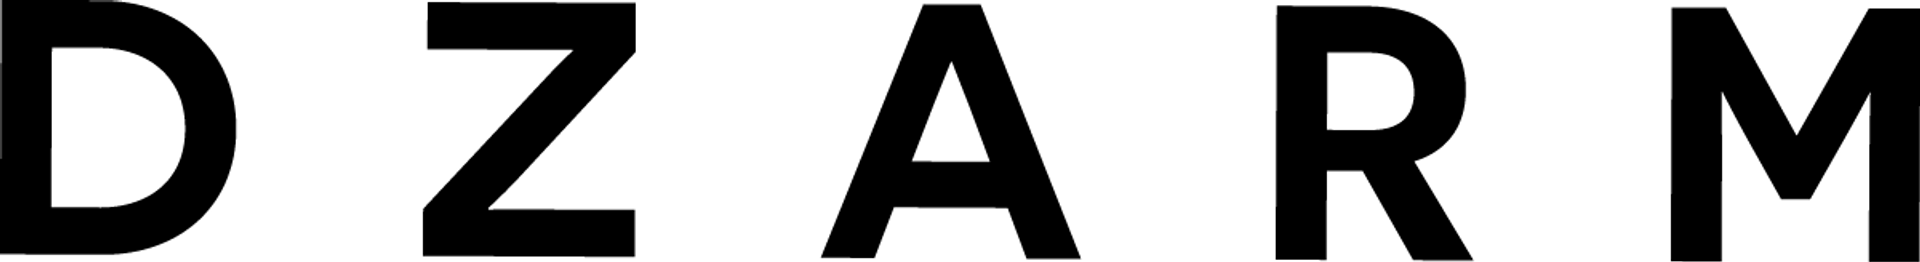 DZARM logo